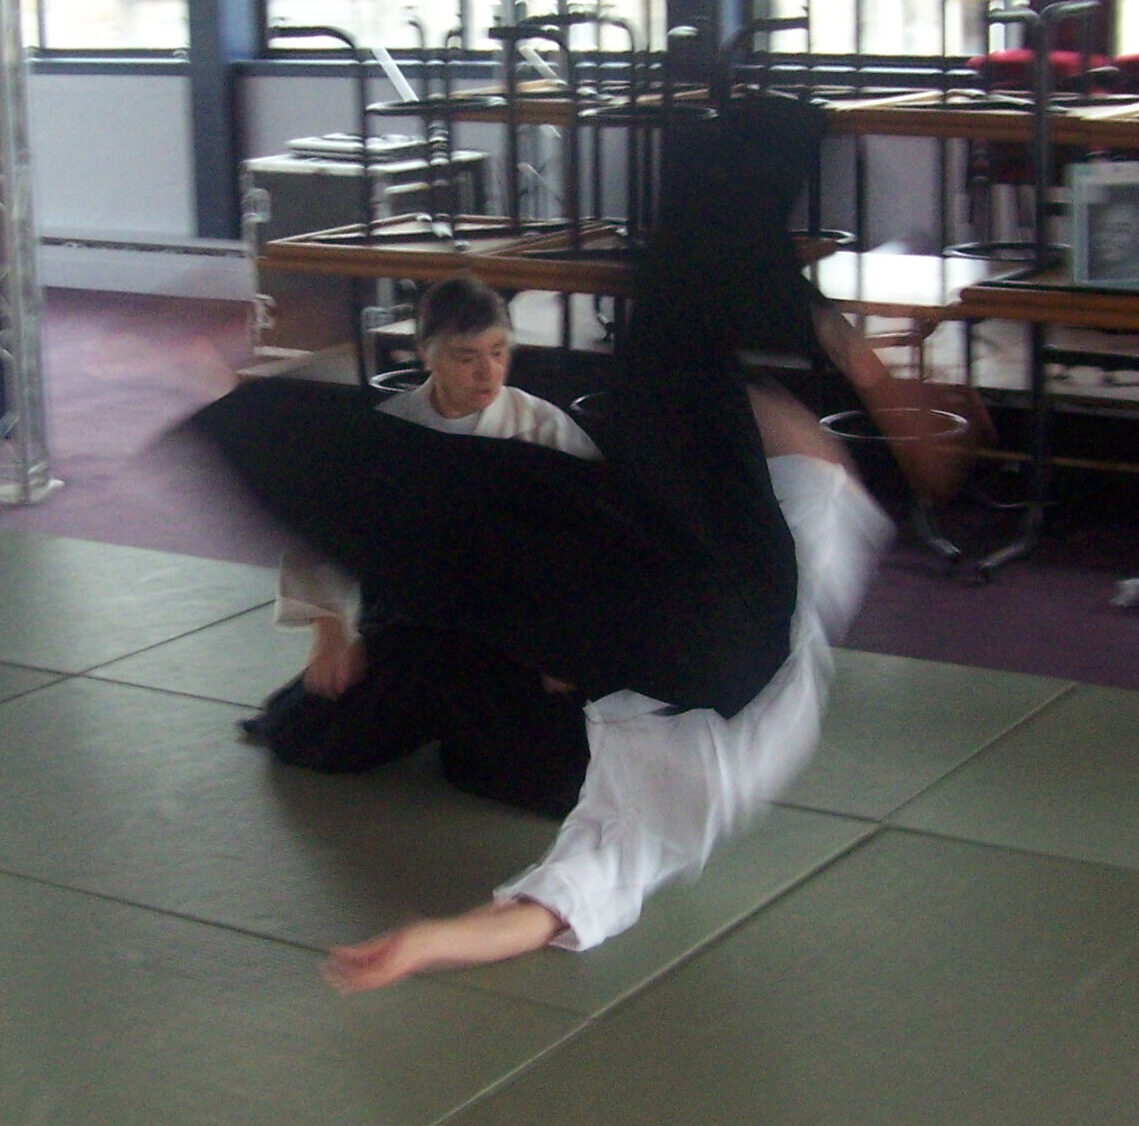 An aikidoka, upside down during a flying mae ukemi